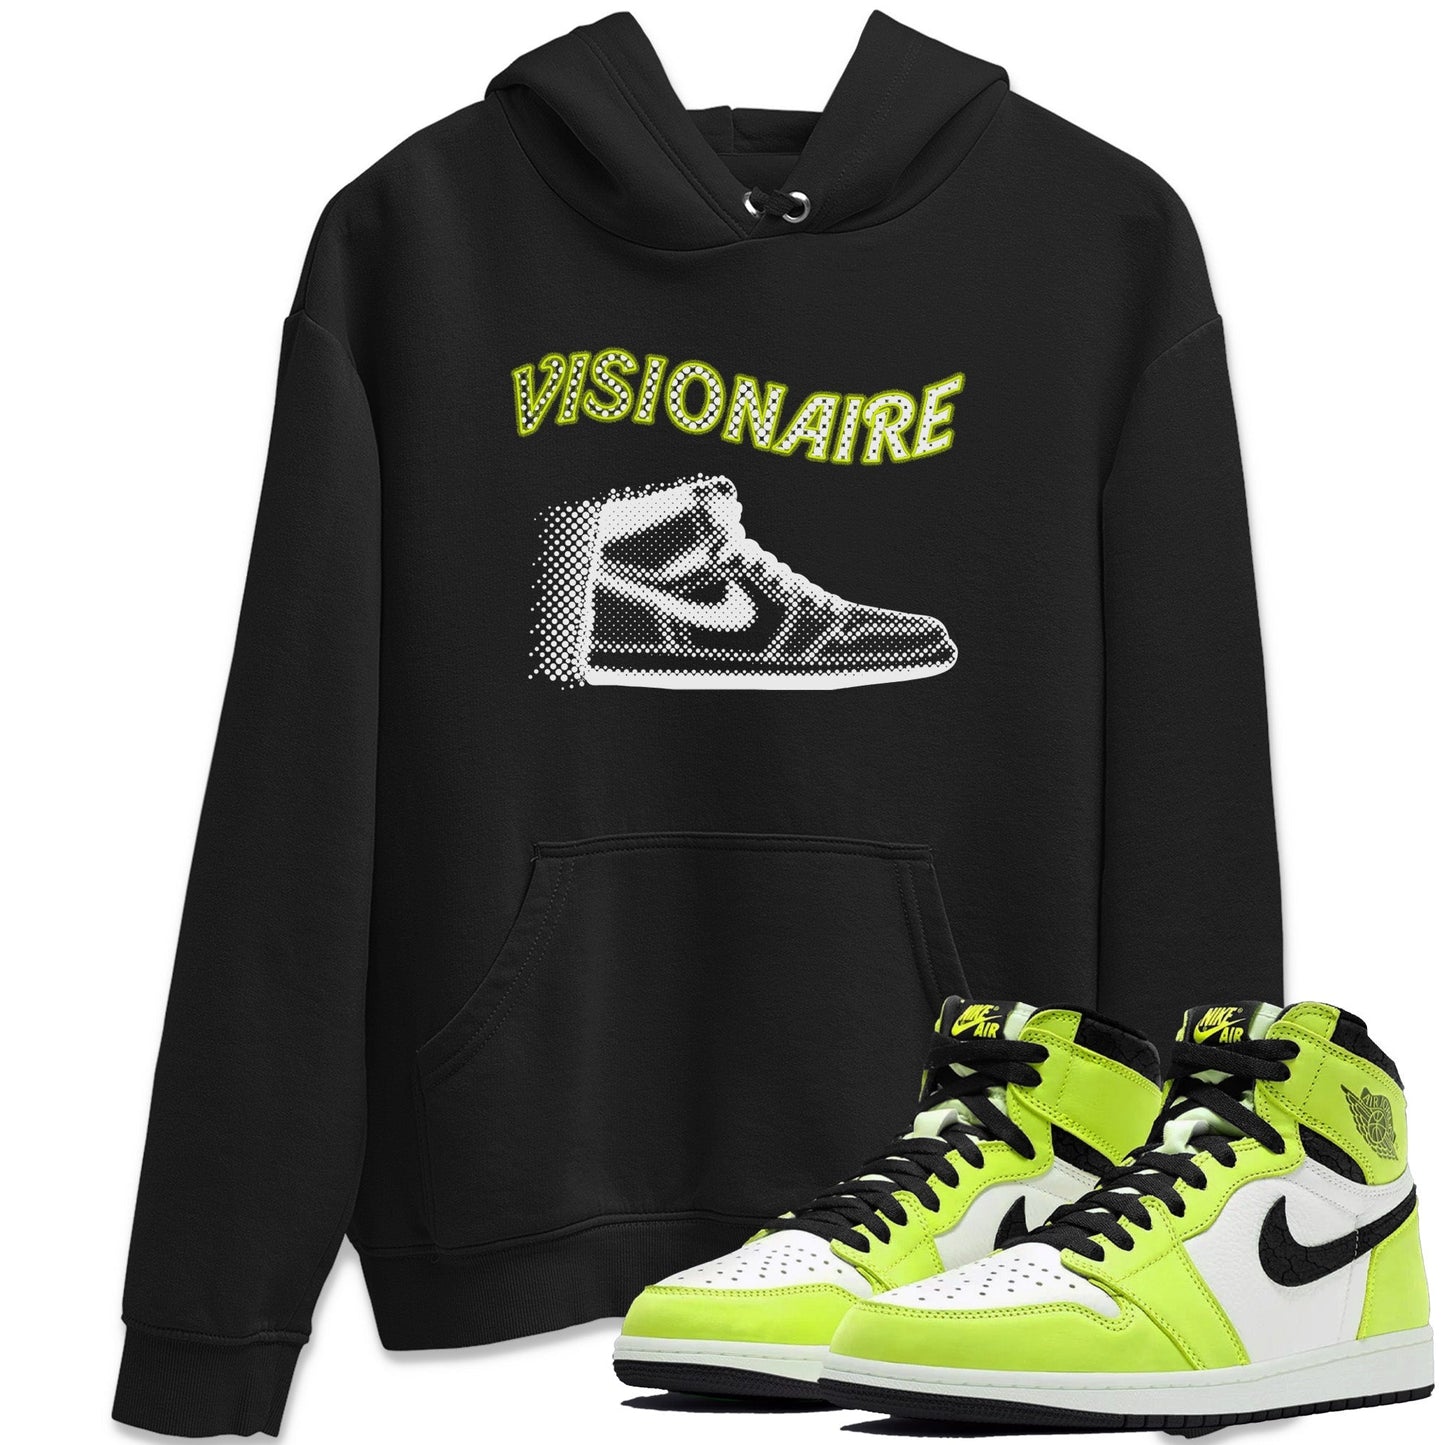 Jordan 1 Visionaire Sneaker Tees Drip Gear Zone Hazy Sneaker Tees Jordan 1 Visionaire Shirt Unisex Shirts